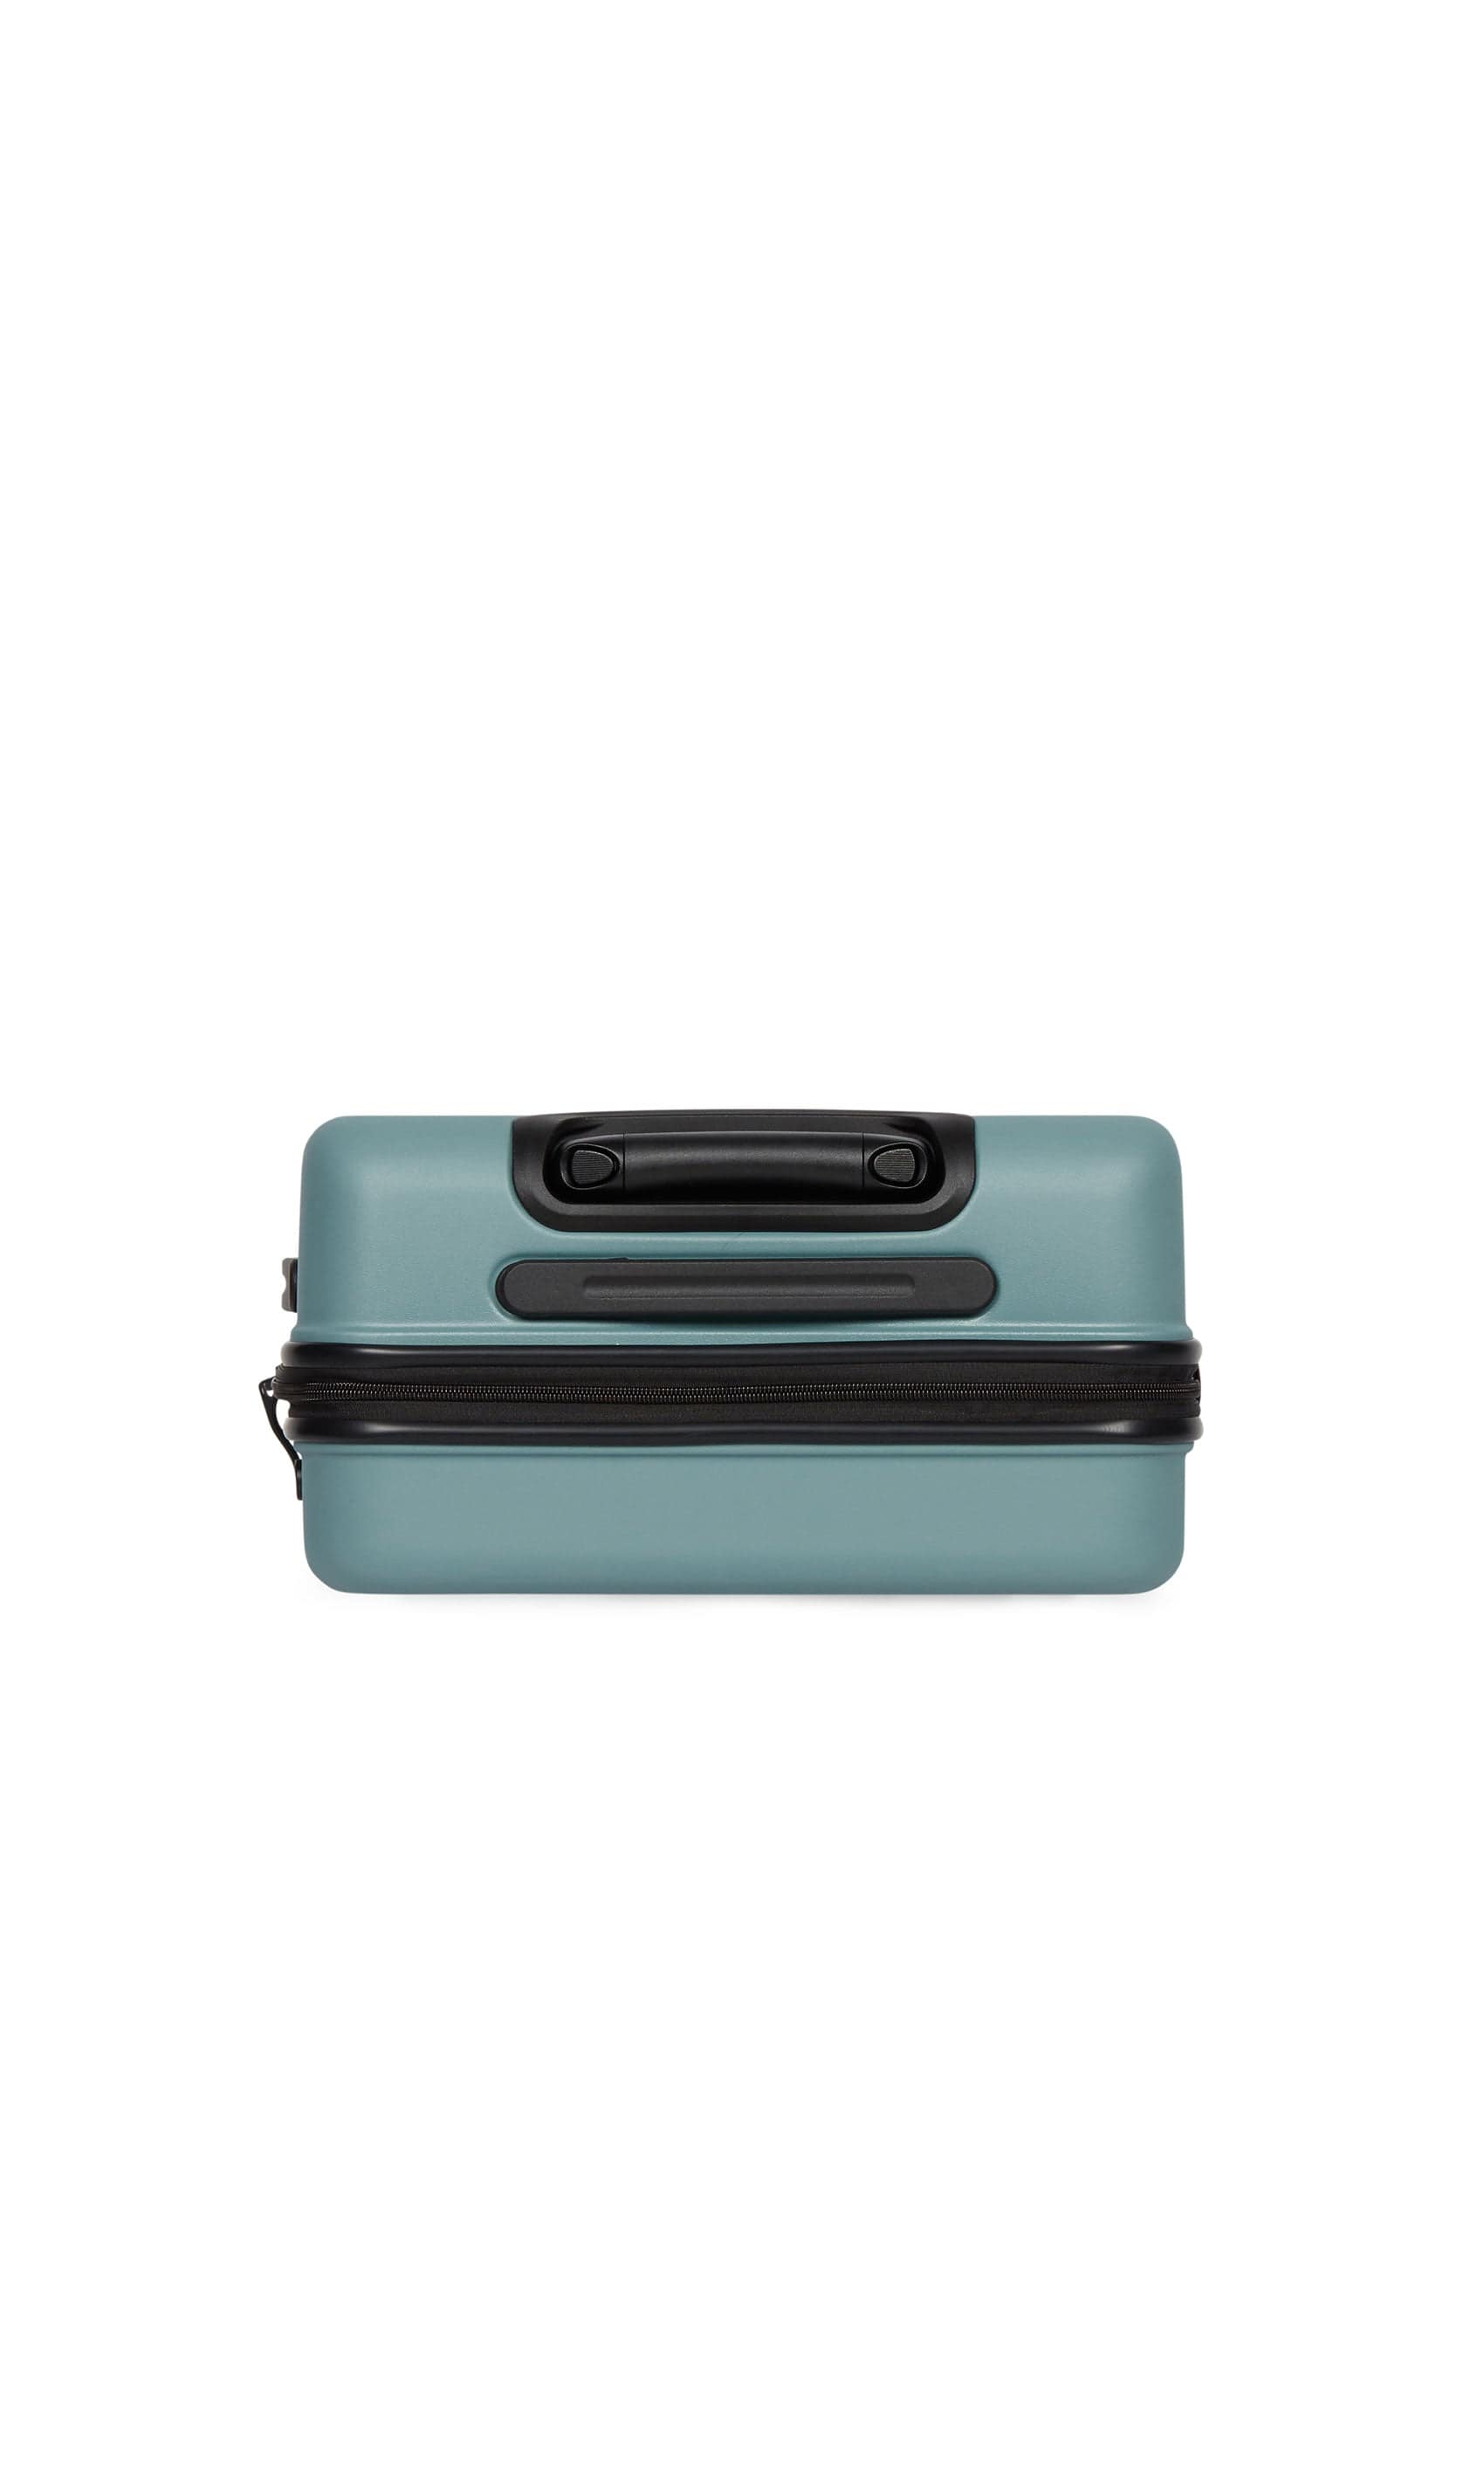 Antler Luggage -  Clifton cabin in mineral - Hard Suitcases Clifton 55x40x20cm Cabin Suitcase Mineral | Hard Suitcase | Antler UK